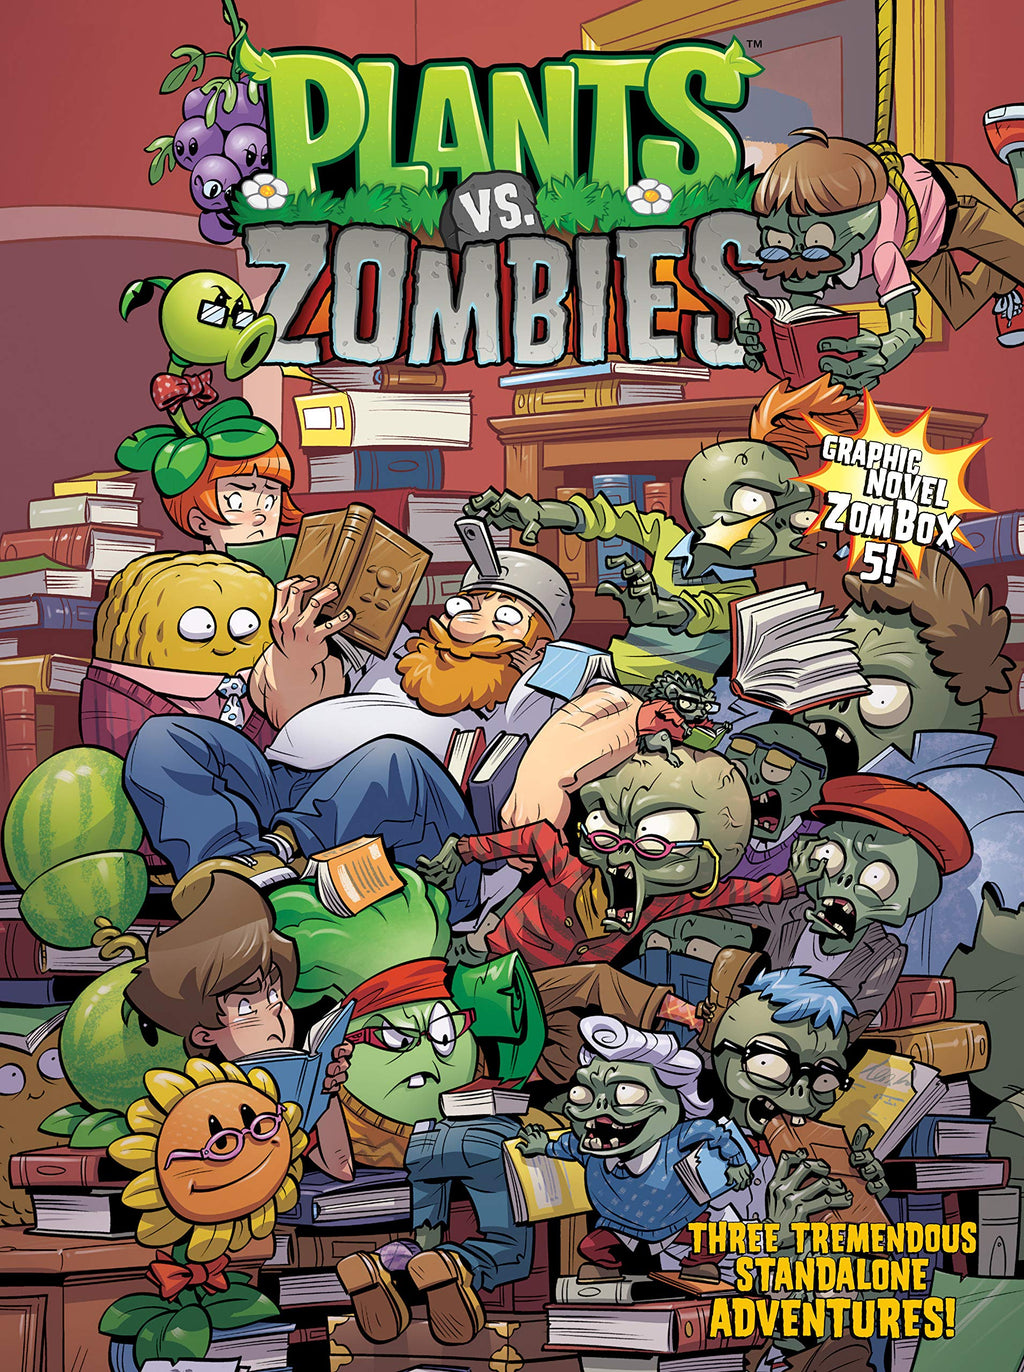 Plants VS Zombies Graphic Novel Zombox 5 - The Comic Warehouse